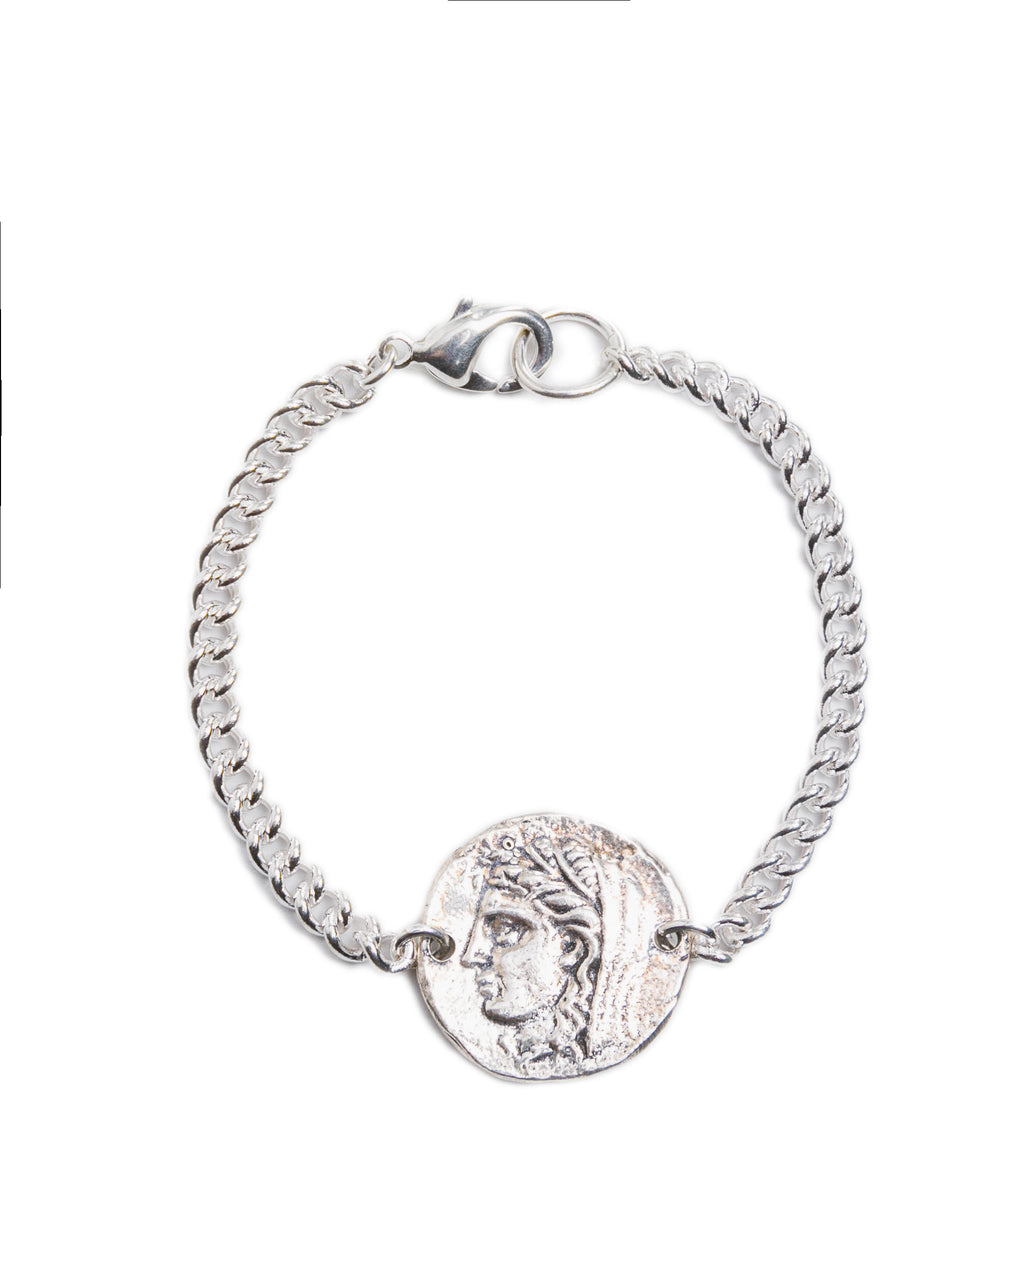 Silver Roman Coin Bracelet